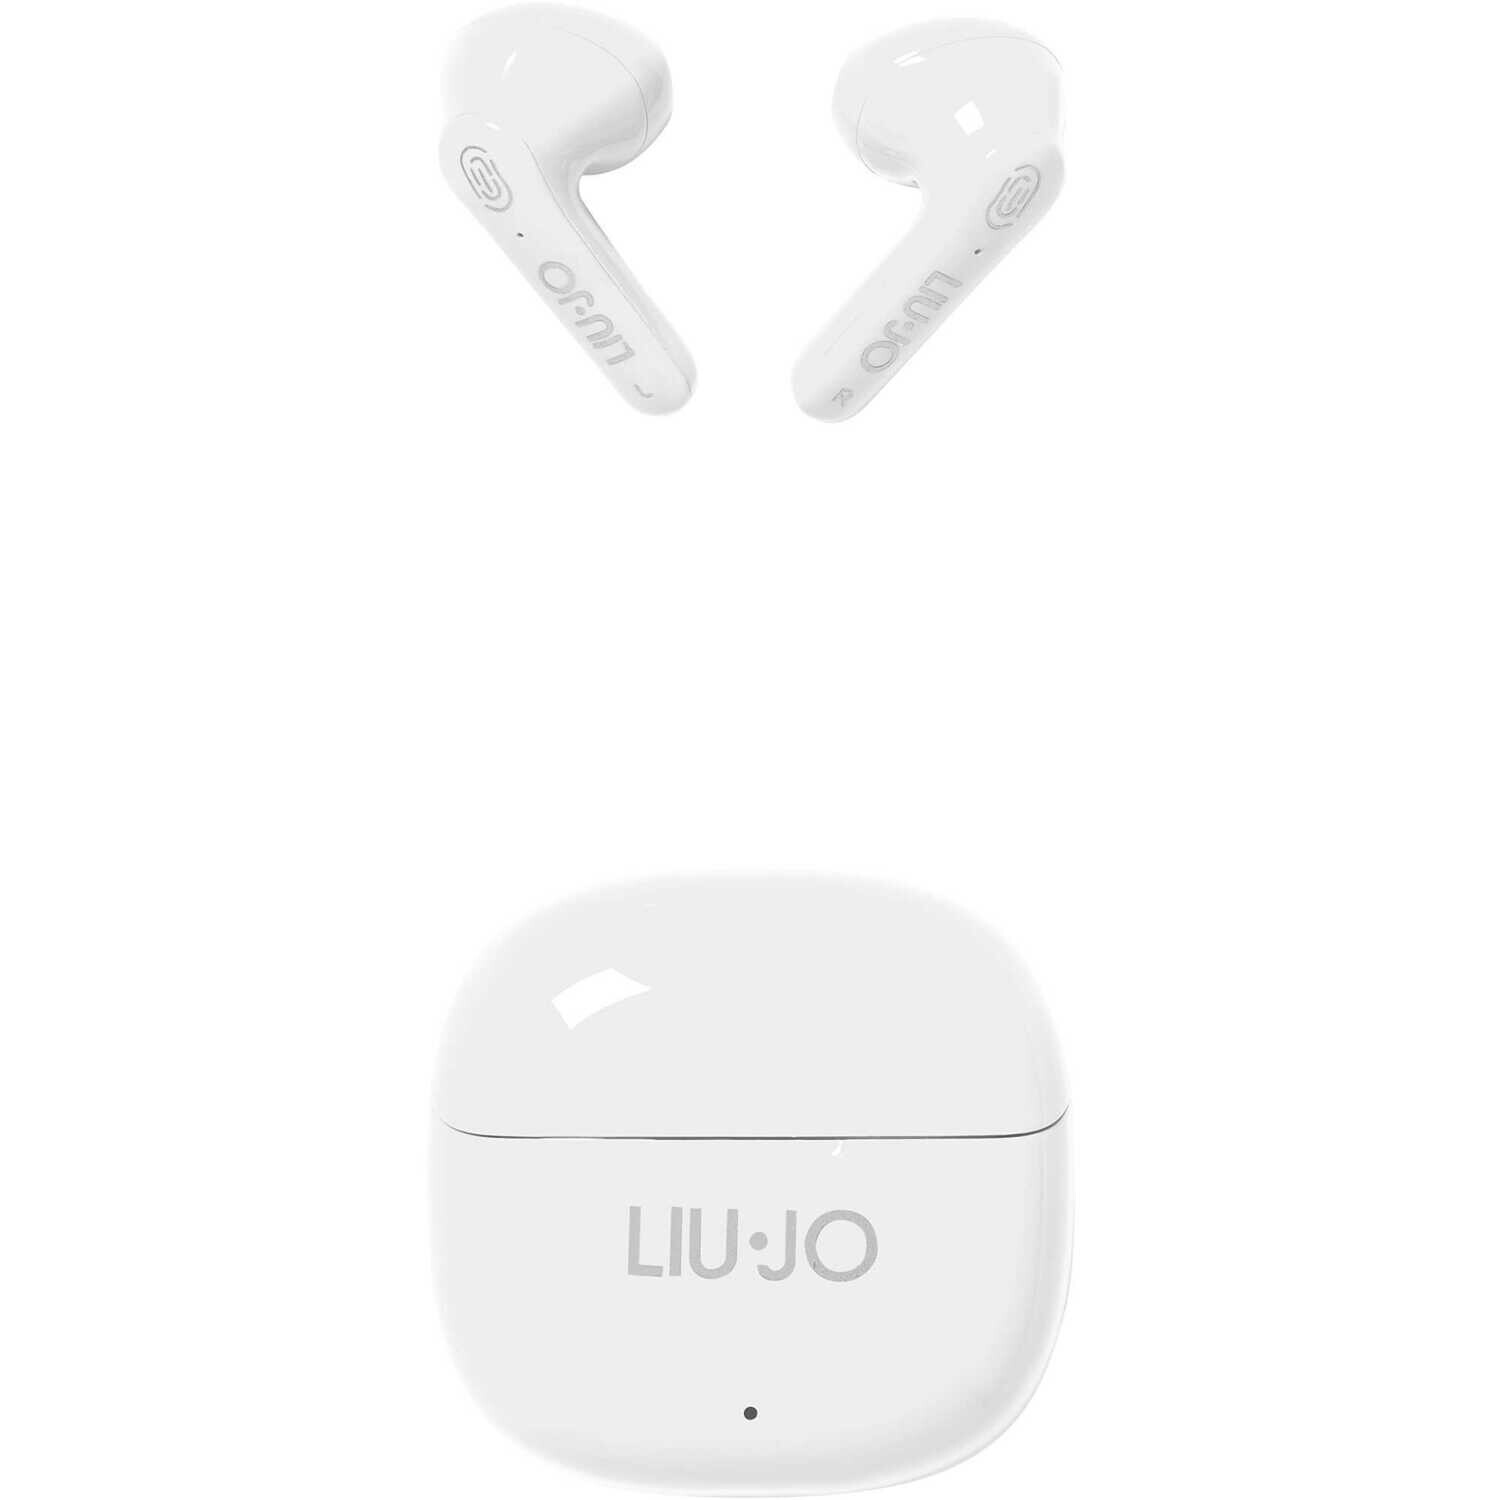 Liu-jo earbuds teen cuffie auricolari wireless bianchi